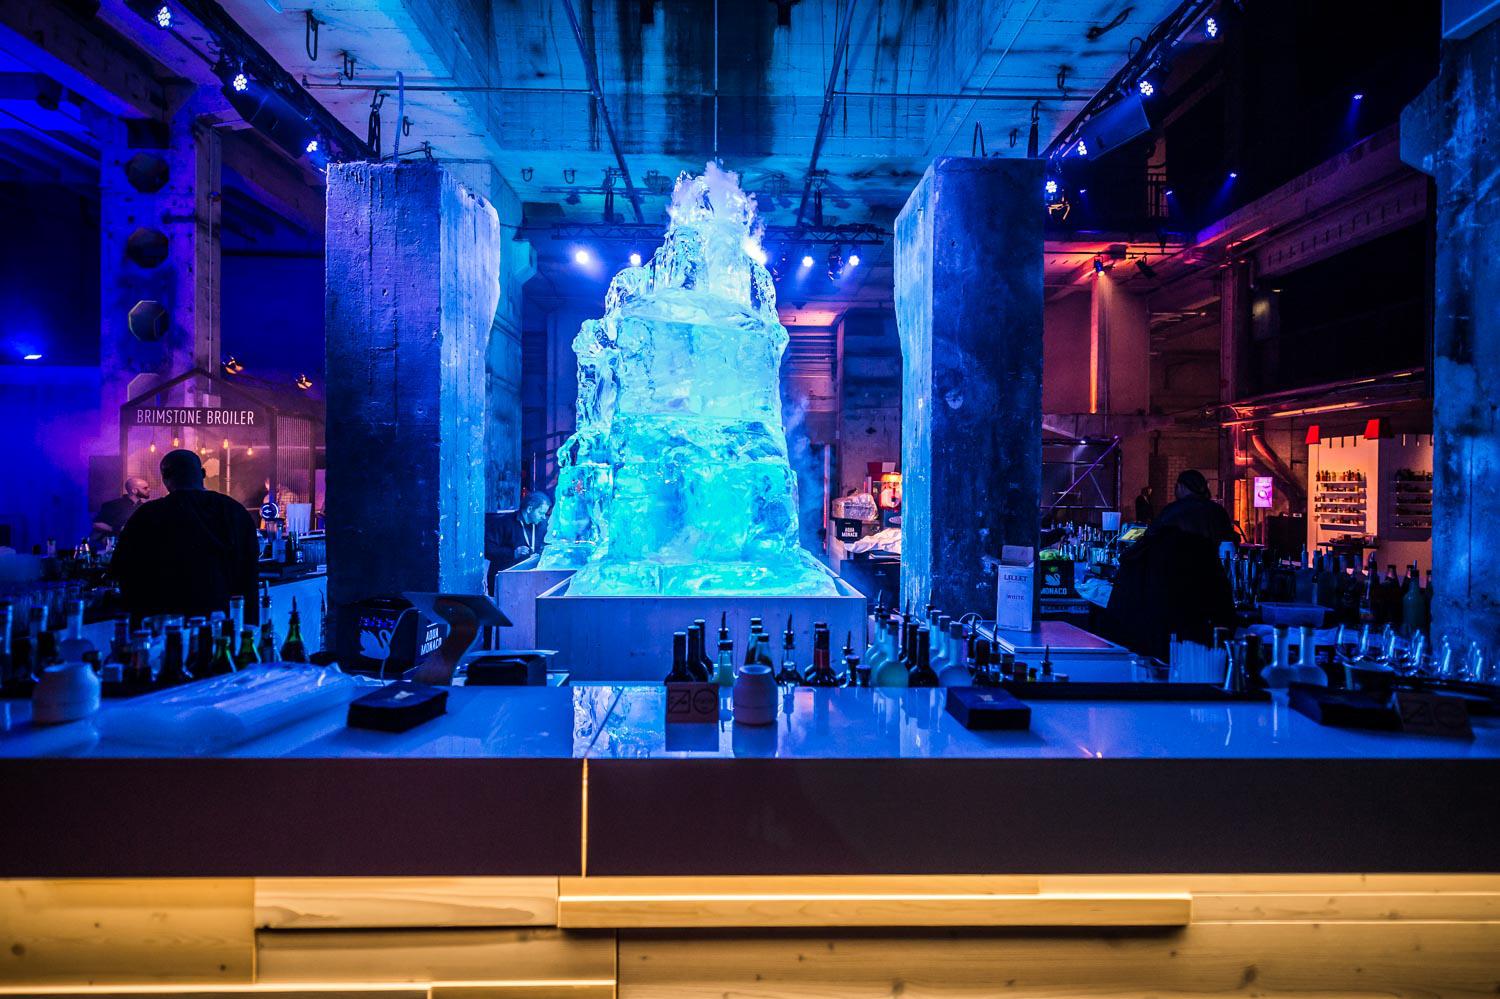 A transparent, iceberg like sculpture glows blue behind a bar in a club environment.